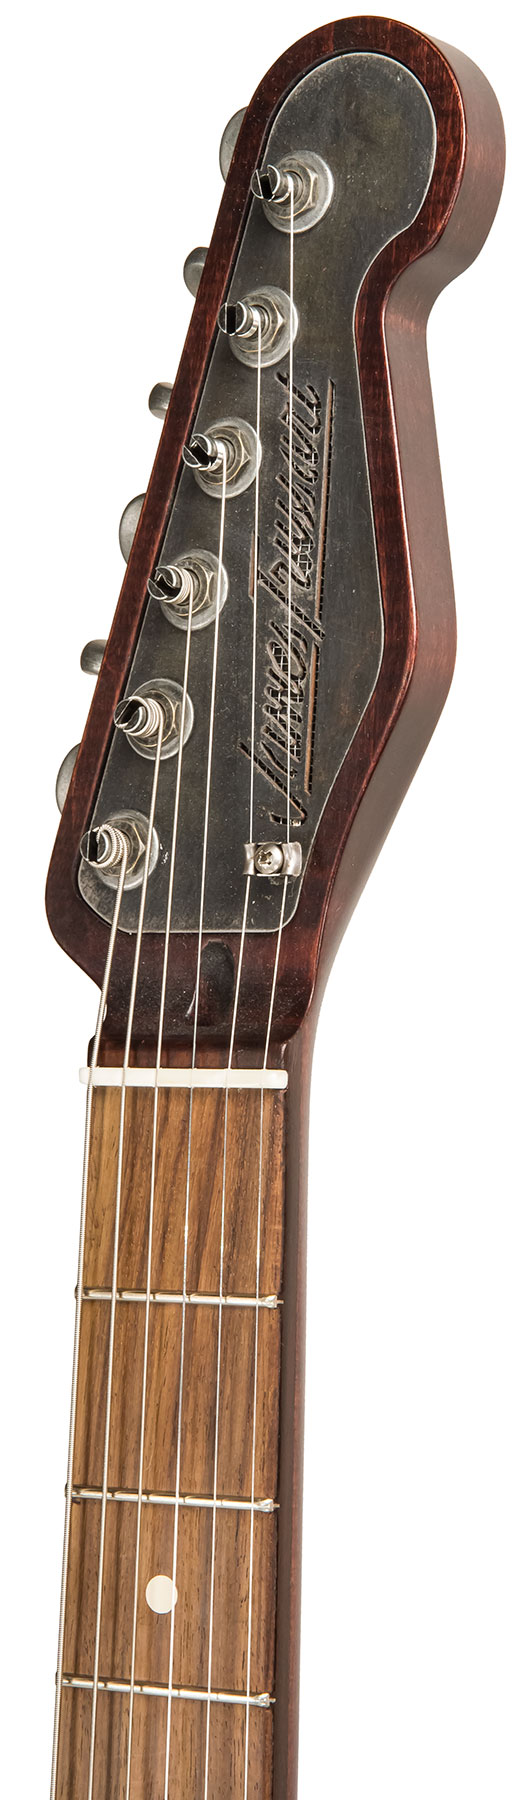 James Trussart Steelcaster Plain Back Sh Pf #20034 - Rust O Matic Gator - Guitare Électrique 1/2 Caisse - Variation 4